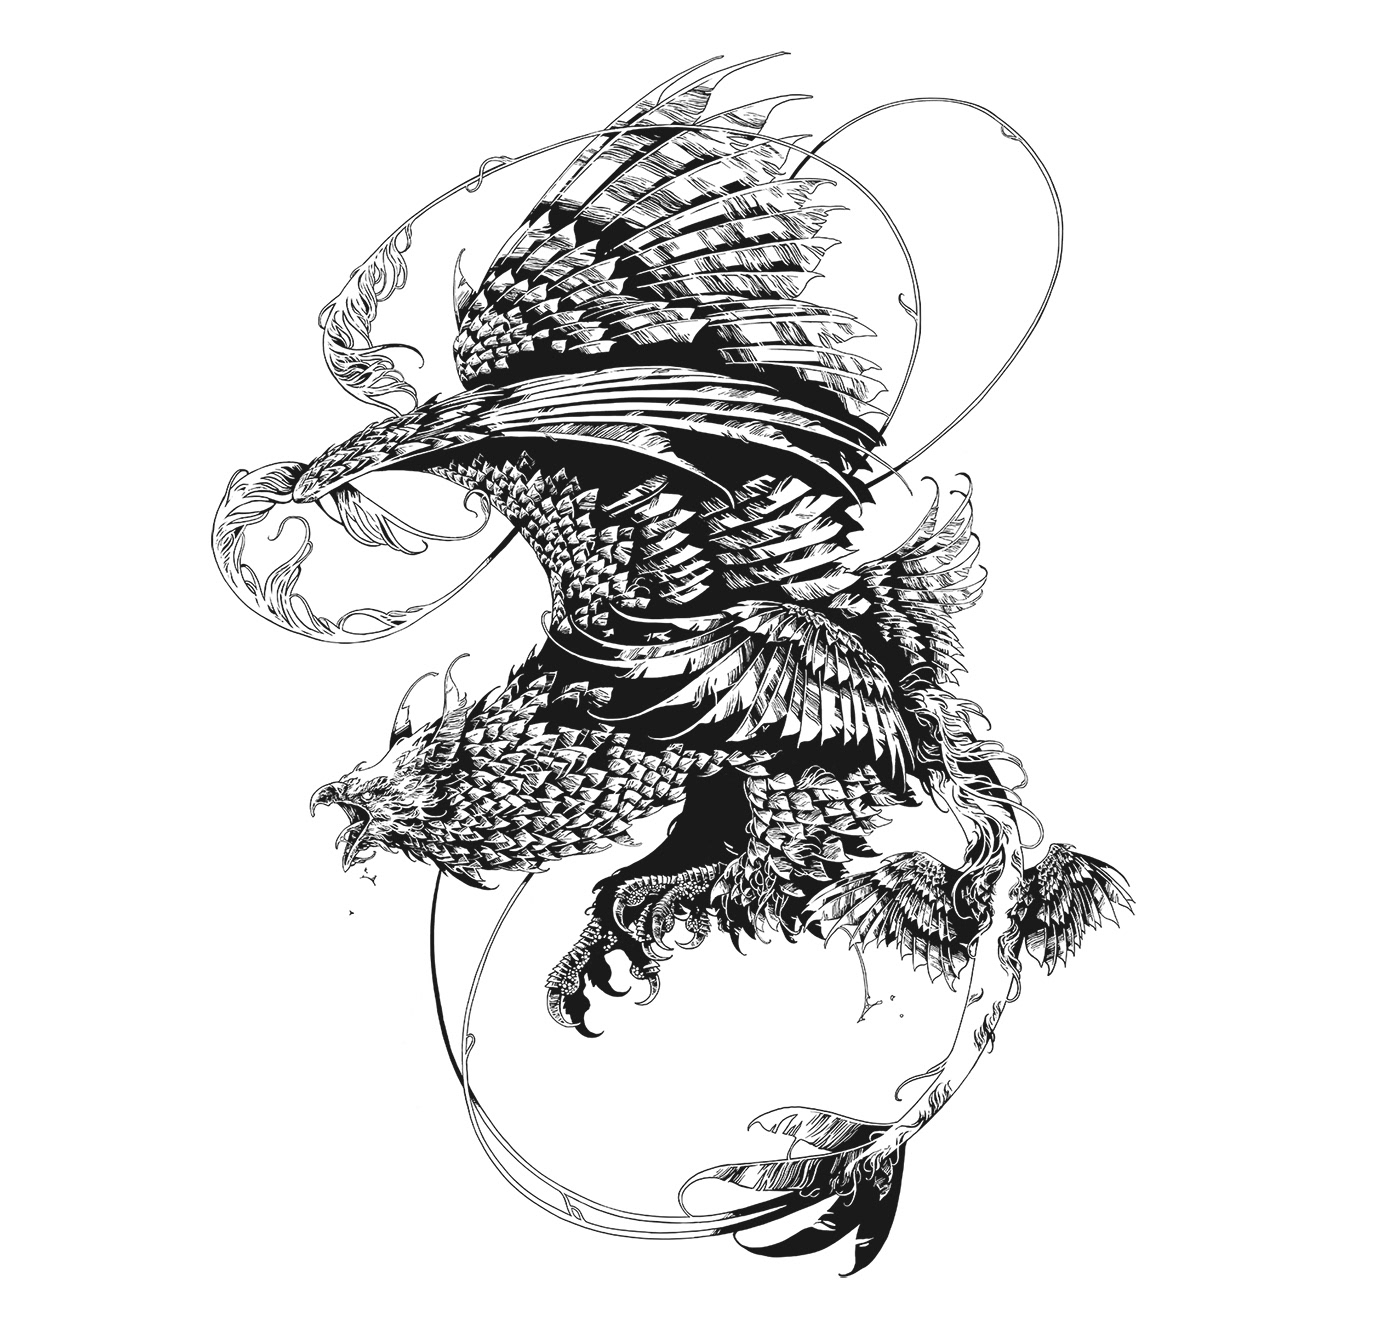 Ivan Belikov Procreate ipad pro Fantastic Beasts Bestiary creatures thunderbird zouwu occamy illustrations